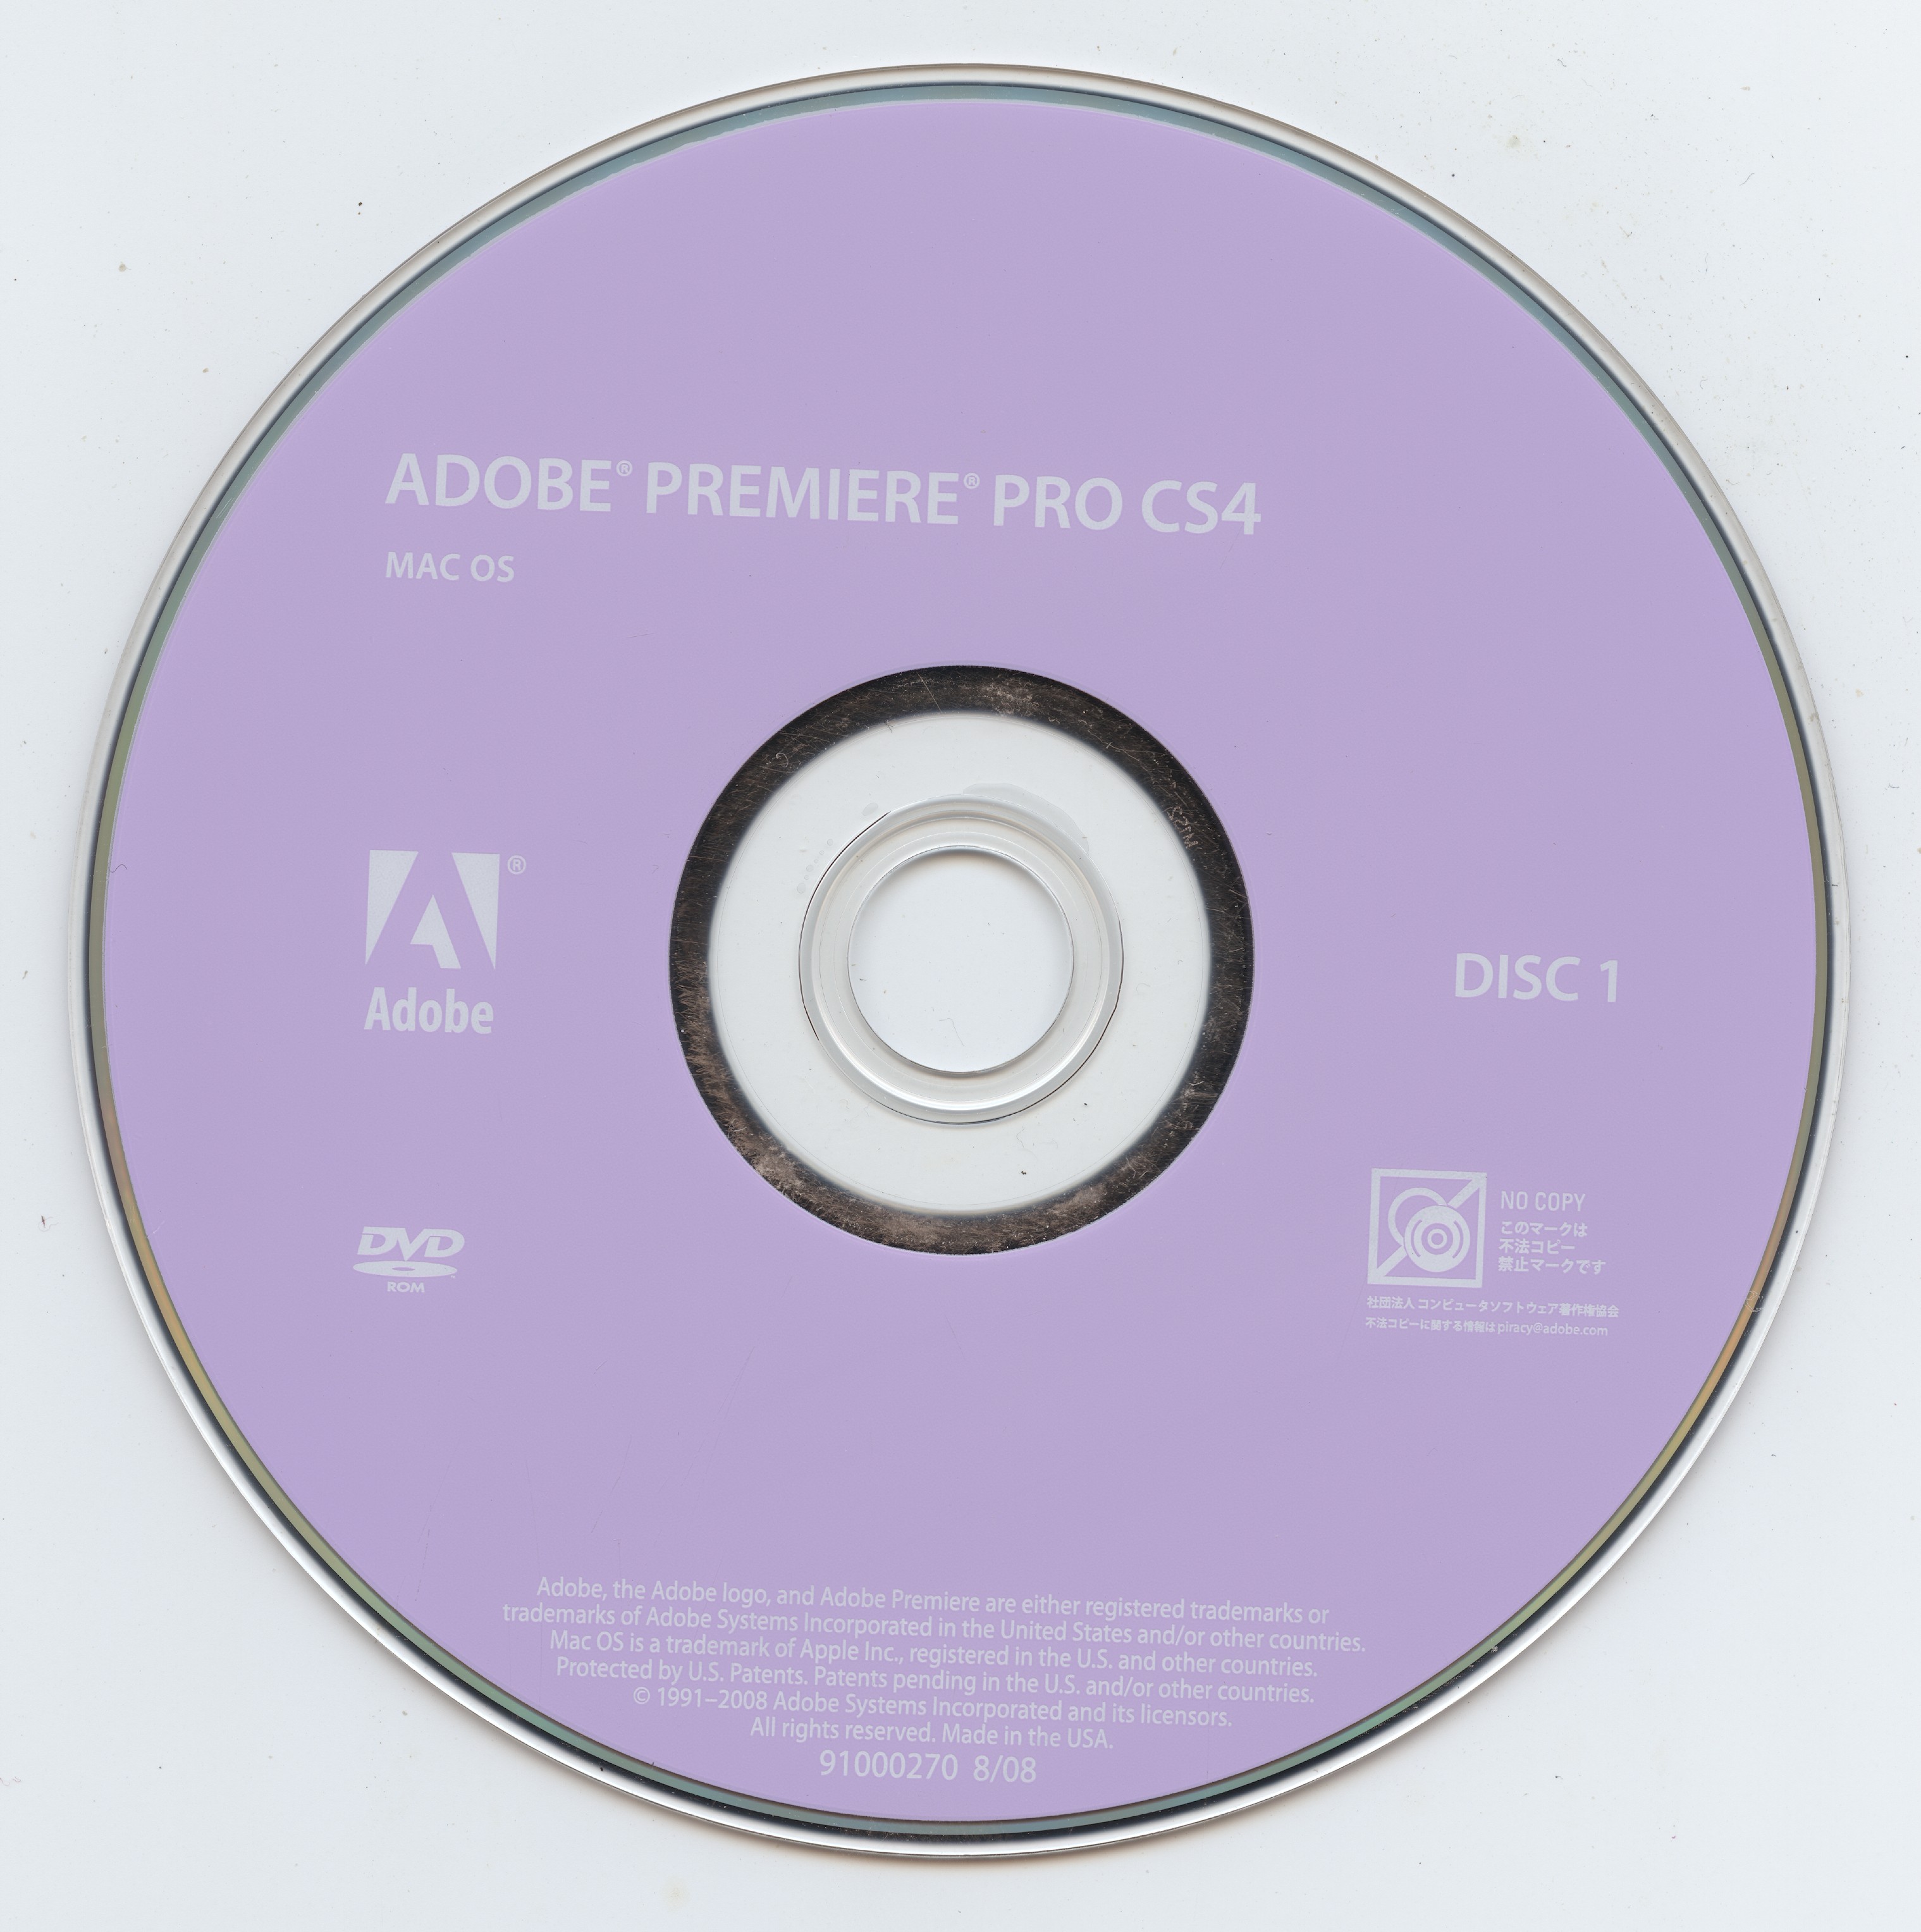 Adobe premiere pro free download reddit Archives 2017